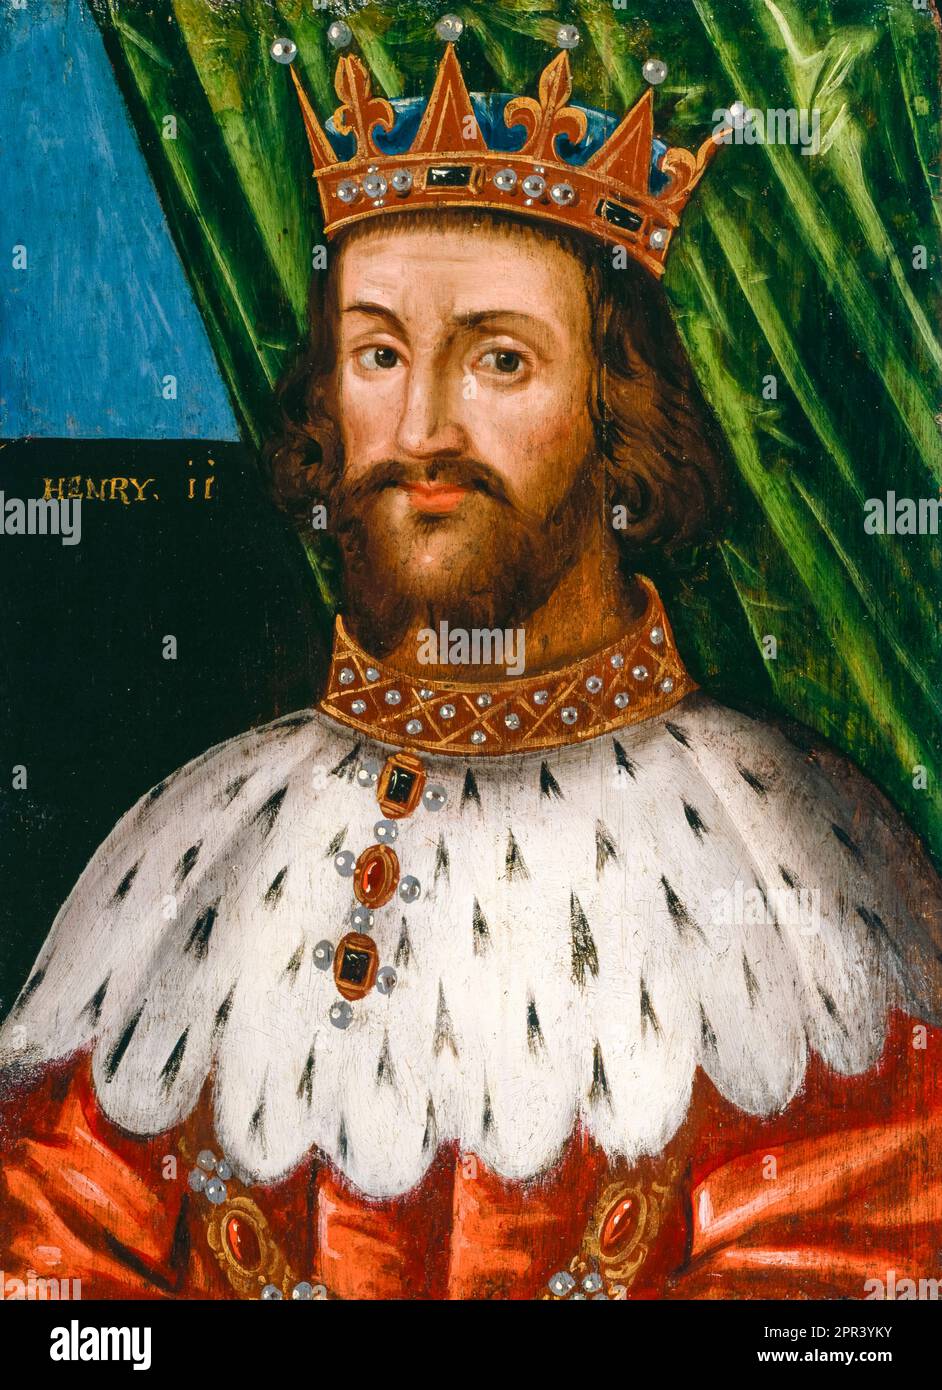 Enrico II d'Inghilterra (1133-1189), Re d'Inghilterra (1154-1189), dipinto a olio su tavola, prima del 1626 Foto Stock